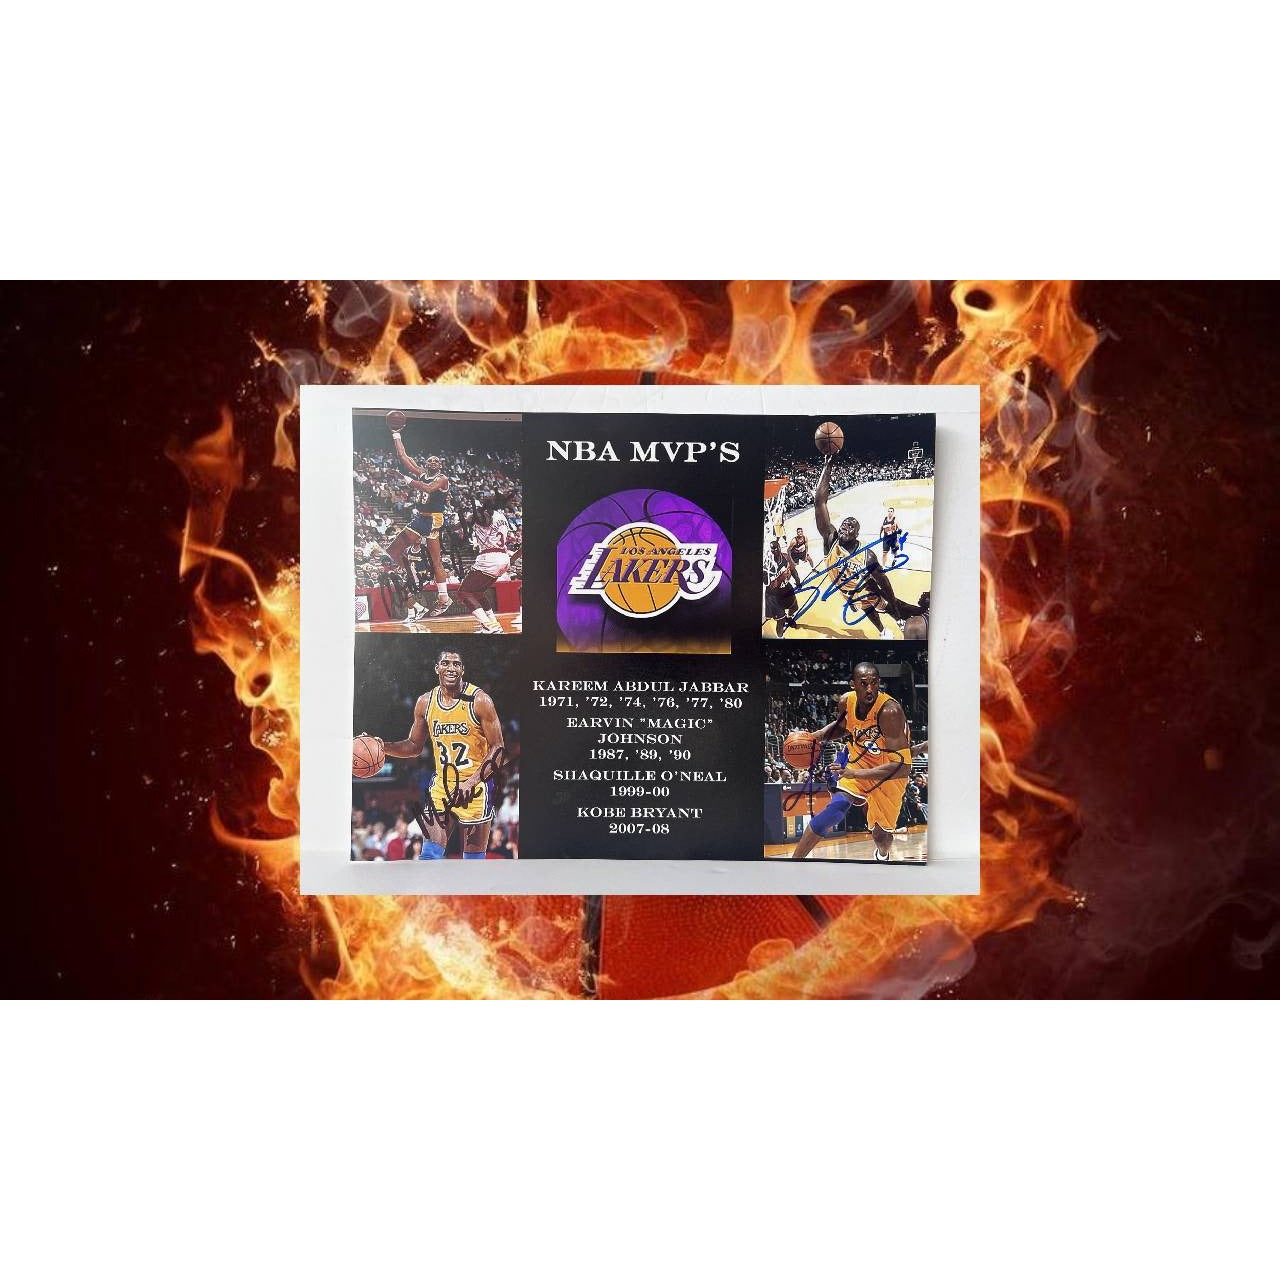 Los Angeles Lakers Kobe Bryant Shaquille O'Neal Magic Johnson Kareem Abdul-Jabbar 11 x 14 photo signed with proof